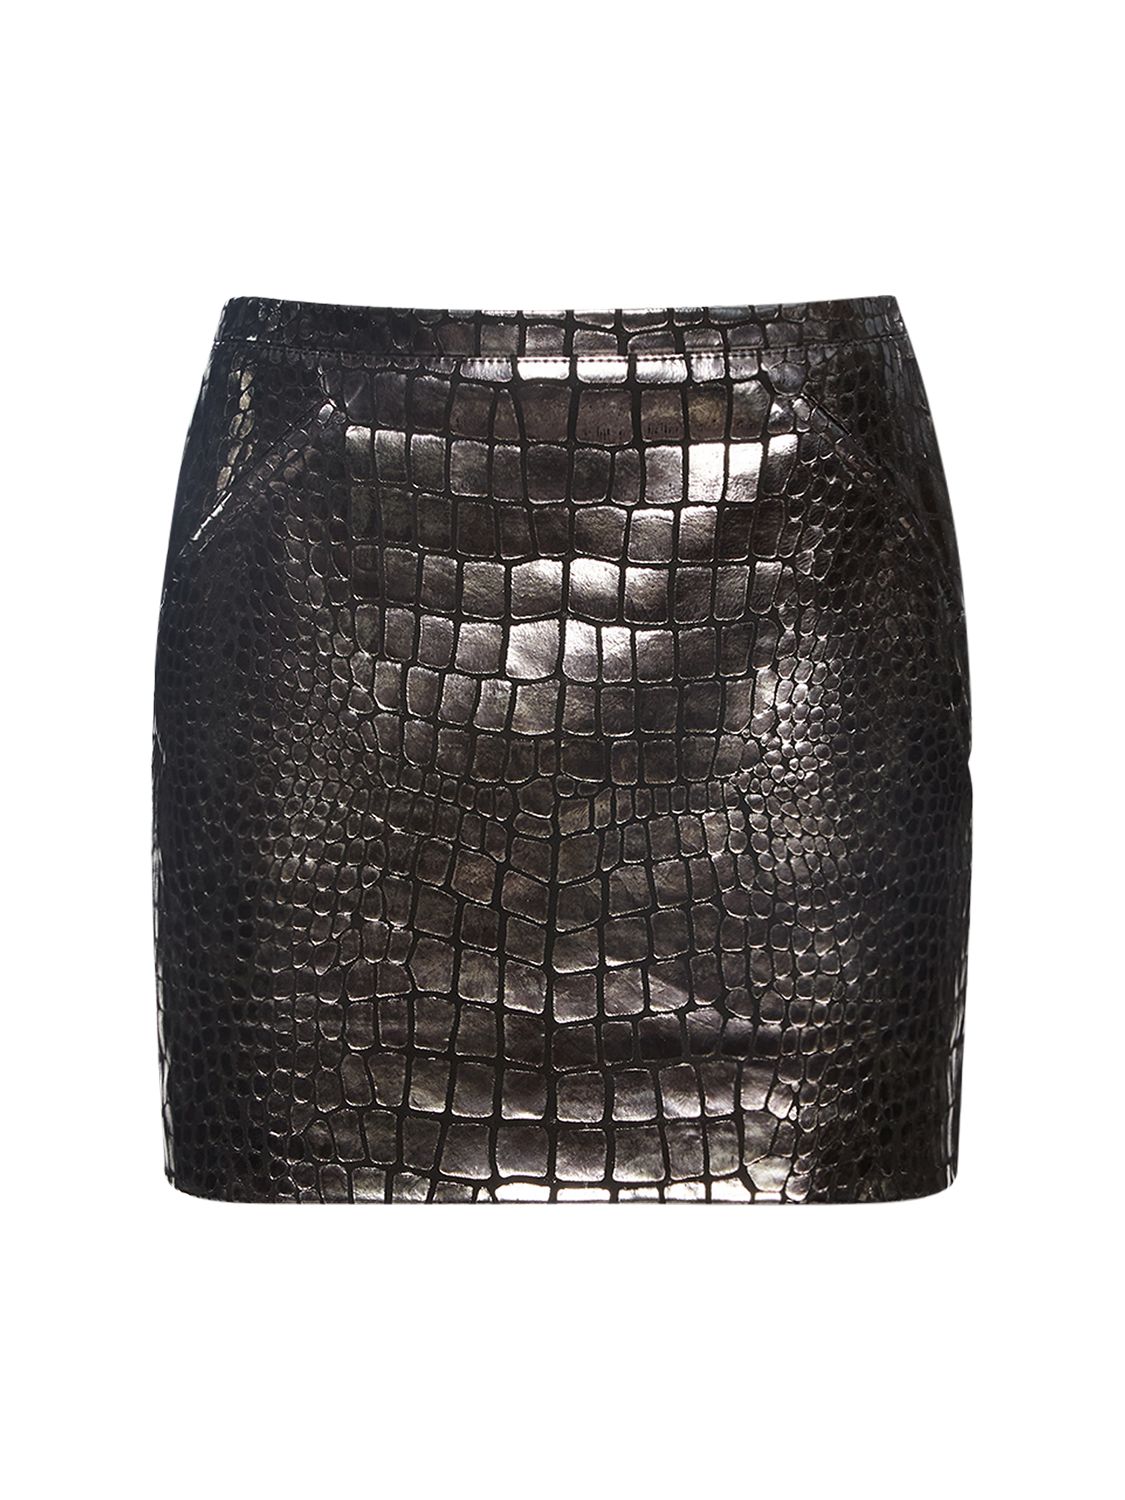 Croc Embossed Laminated Leather Skirt